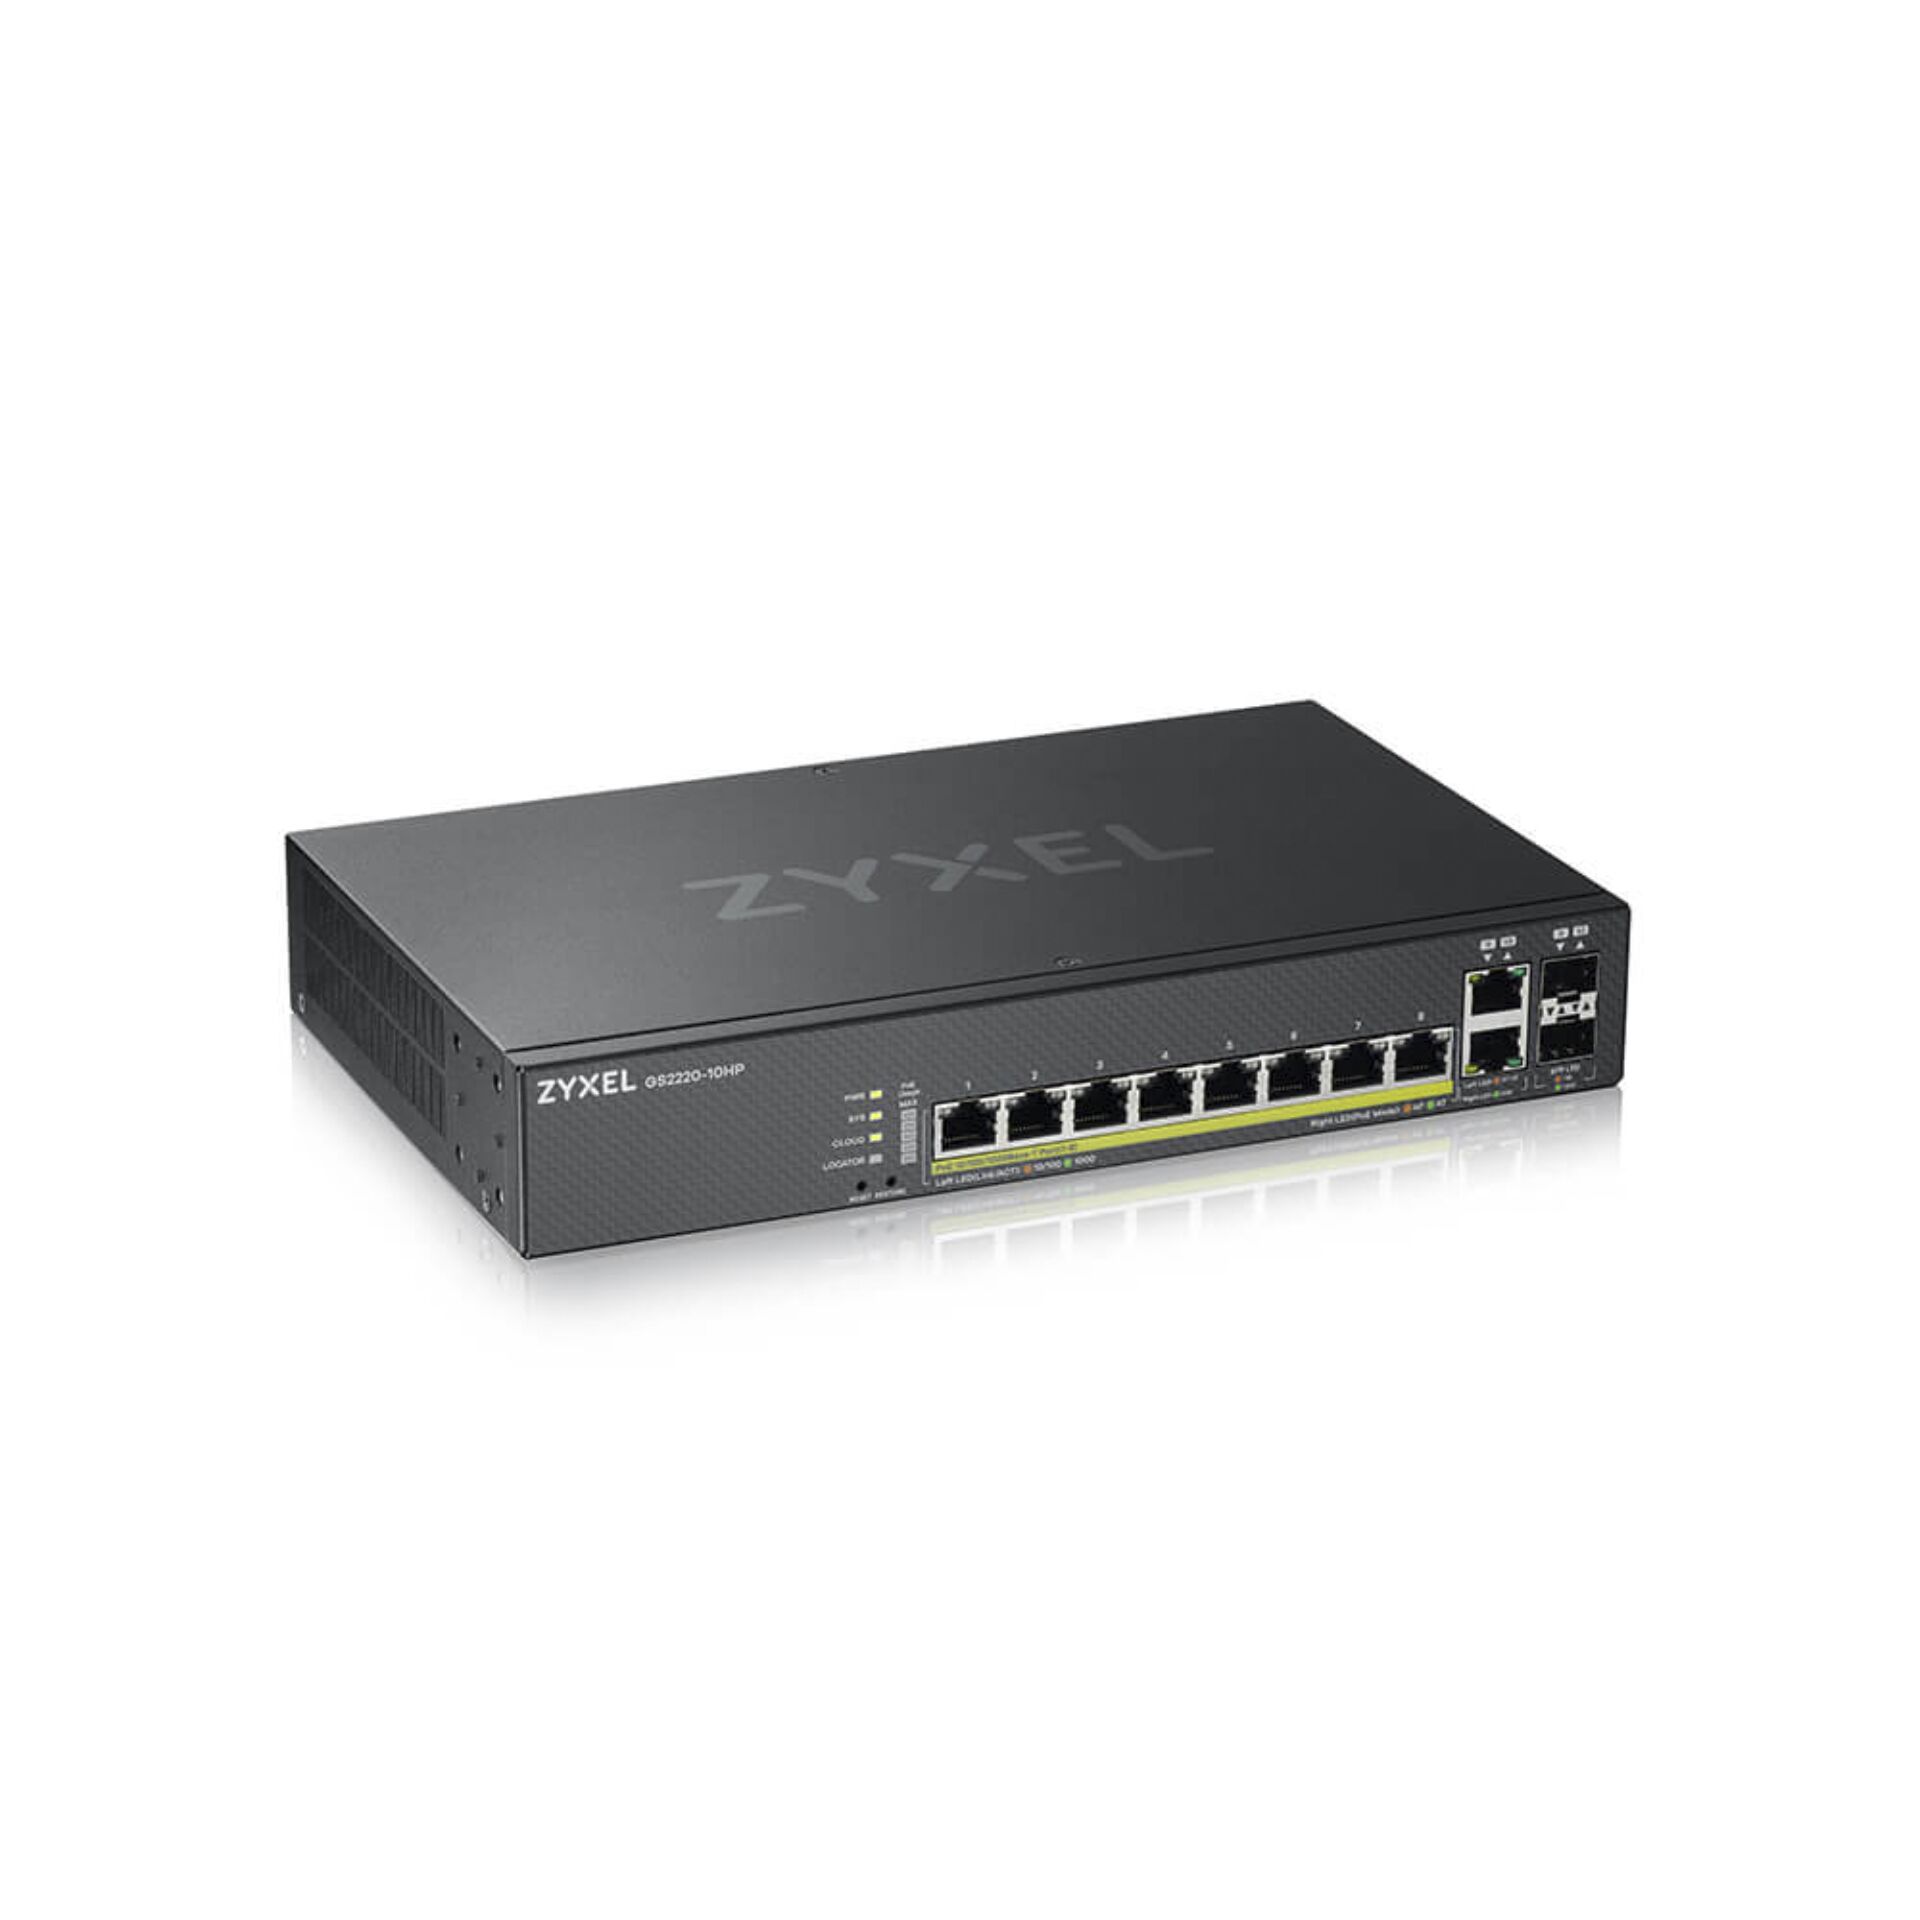 Zyxel GS2220-10HP 8-Port + 2x SFP/Rj45 Gb POE